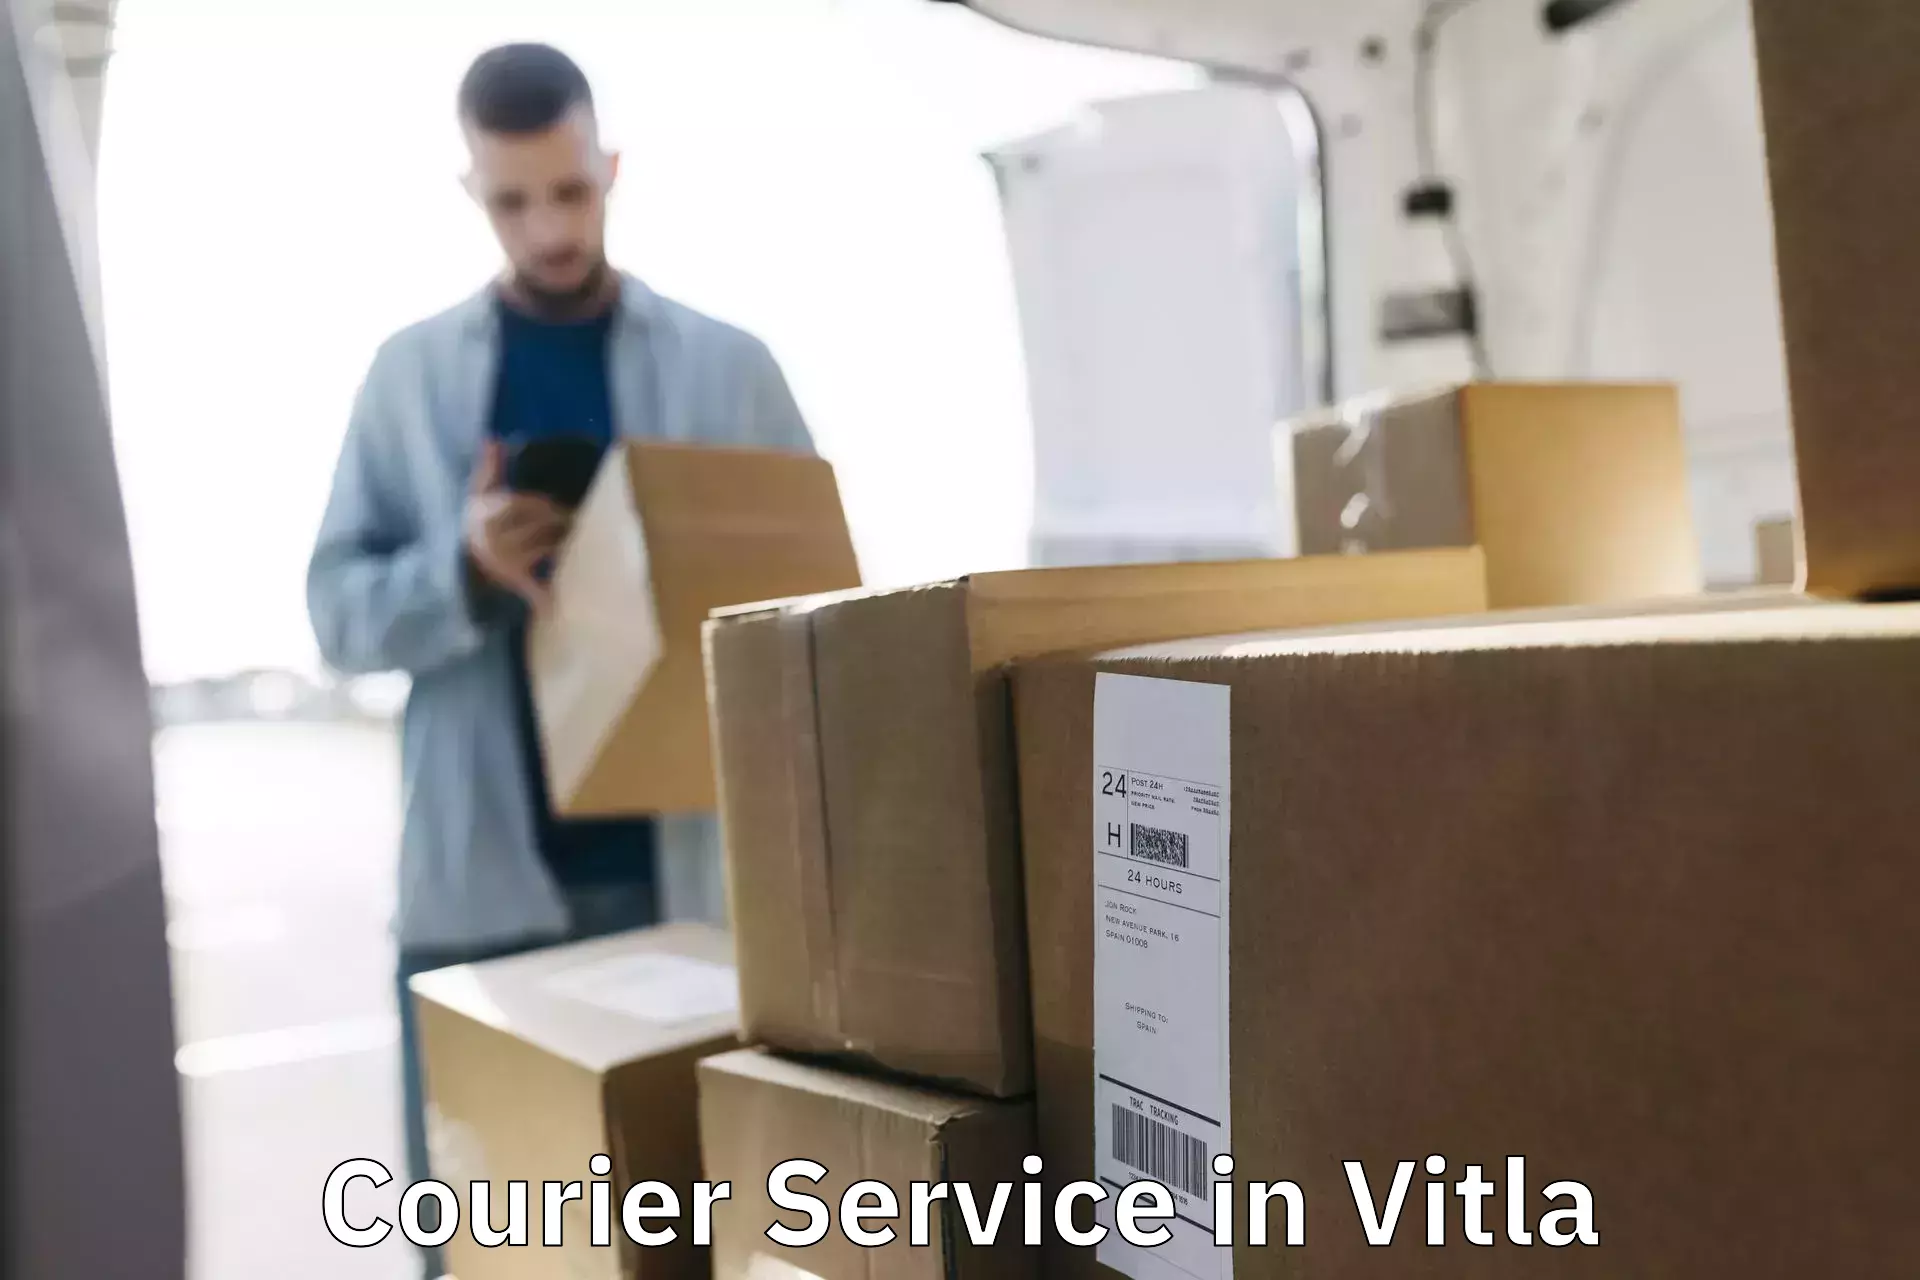 Bulk shipping discounts in Vitla